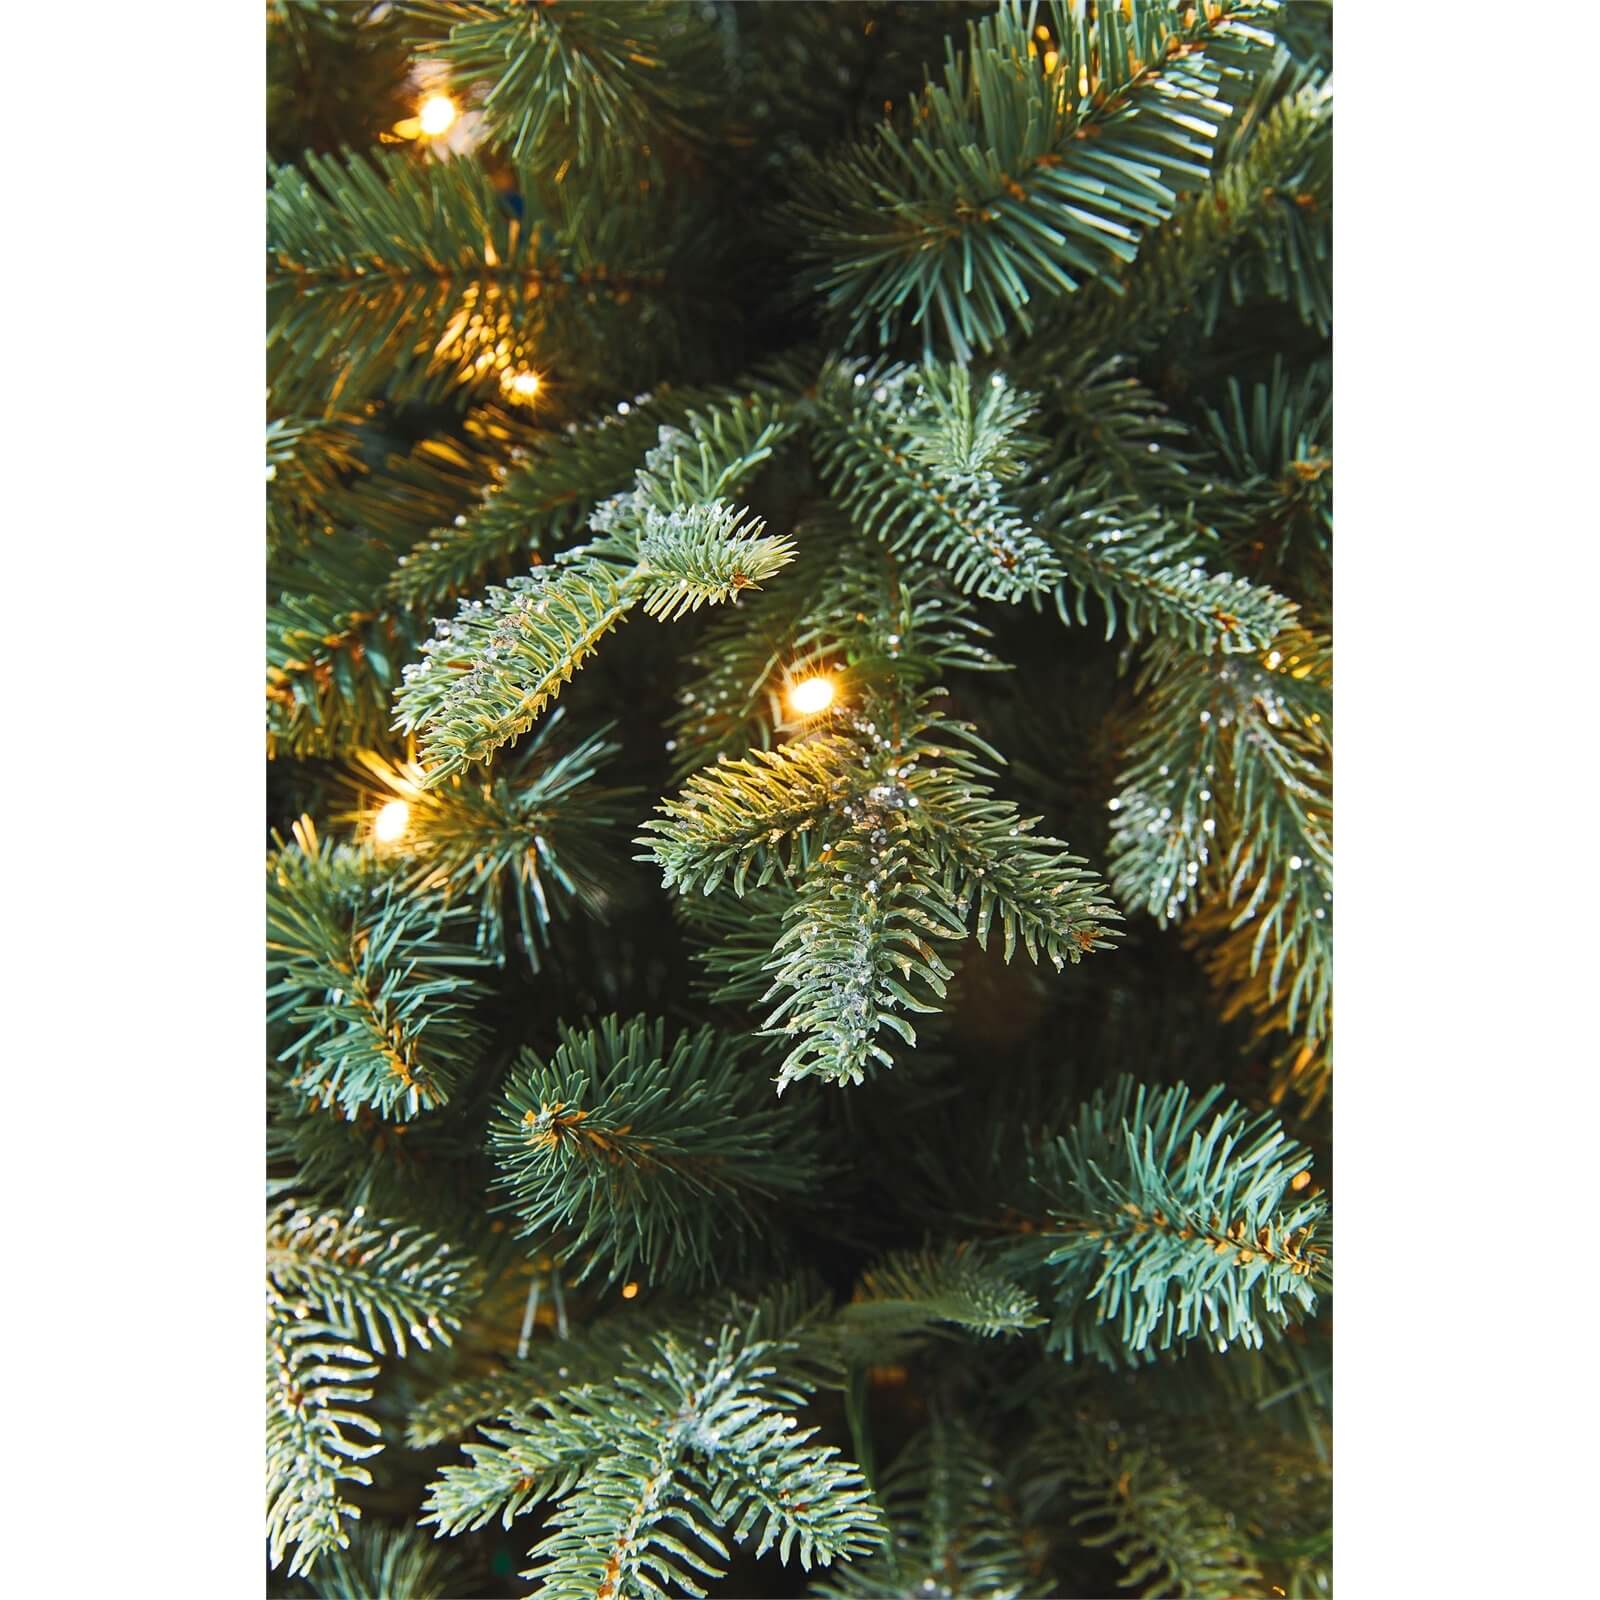 7ft Salzburg Glitter Pre-lit Premium Christmas Tree